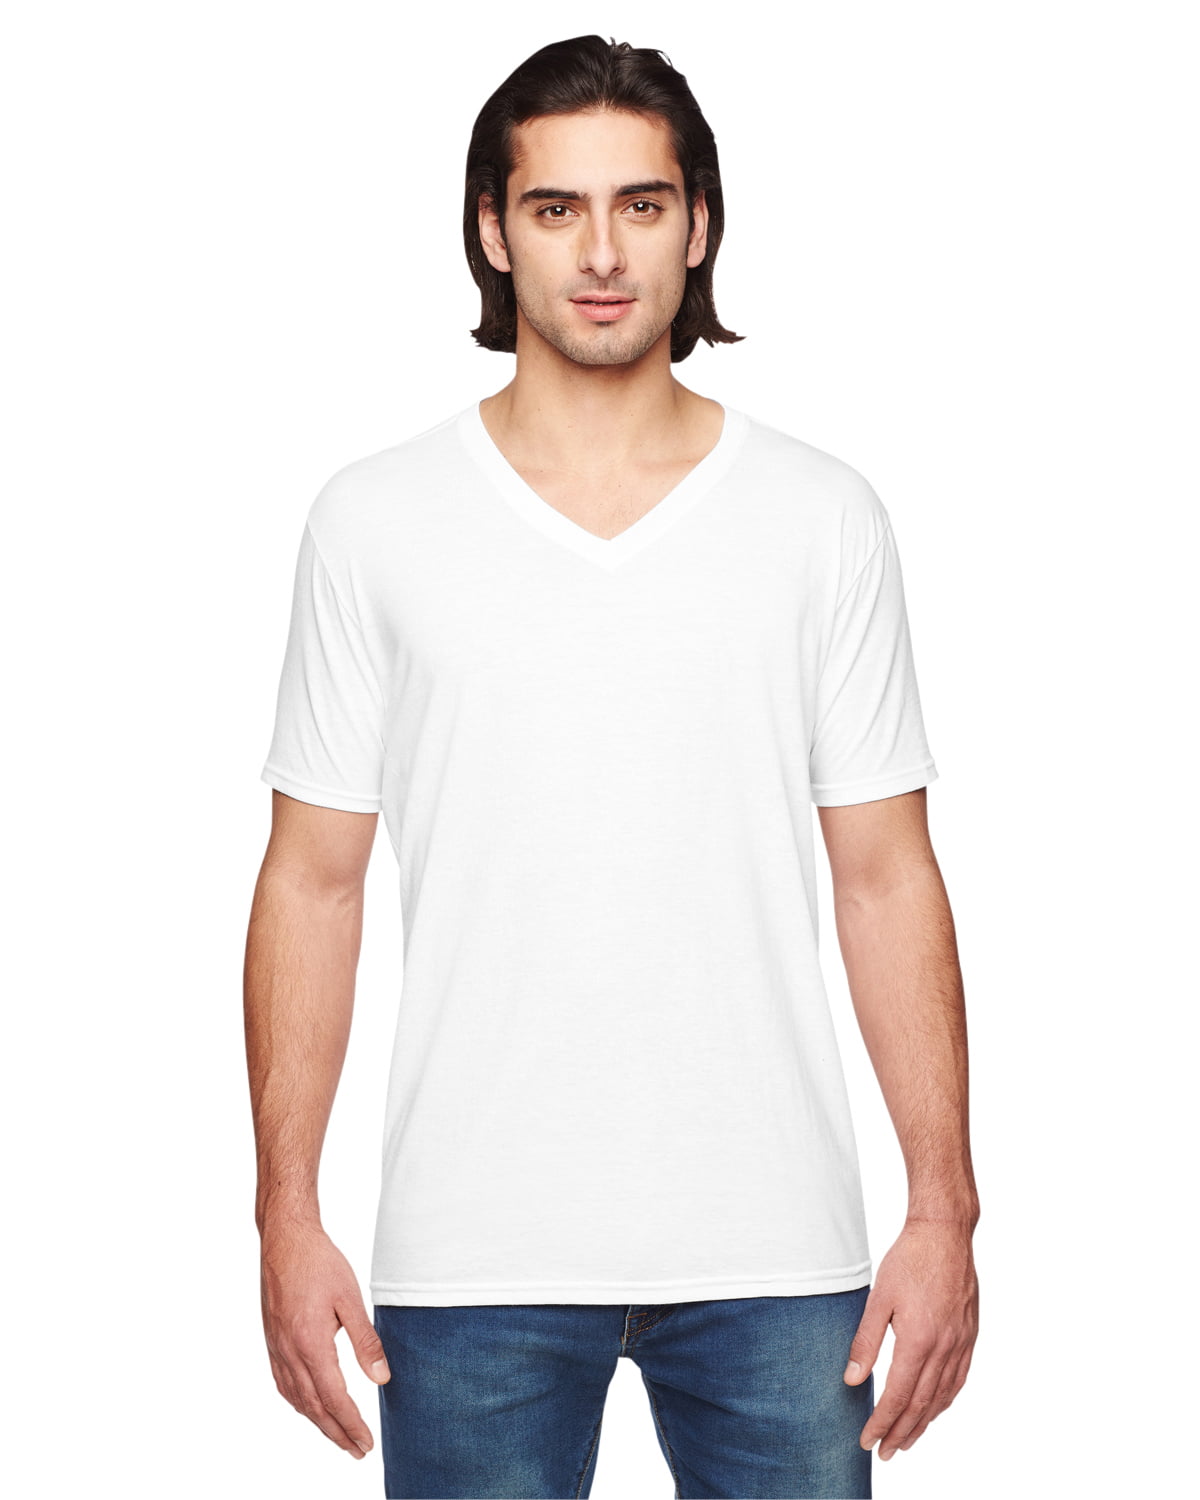 Anvil Mens V-Neck T-Shirt Fashion Plain Cotton Blank Summer Casual TOP Tee Shirt 